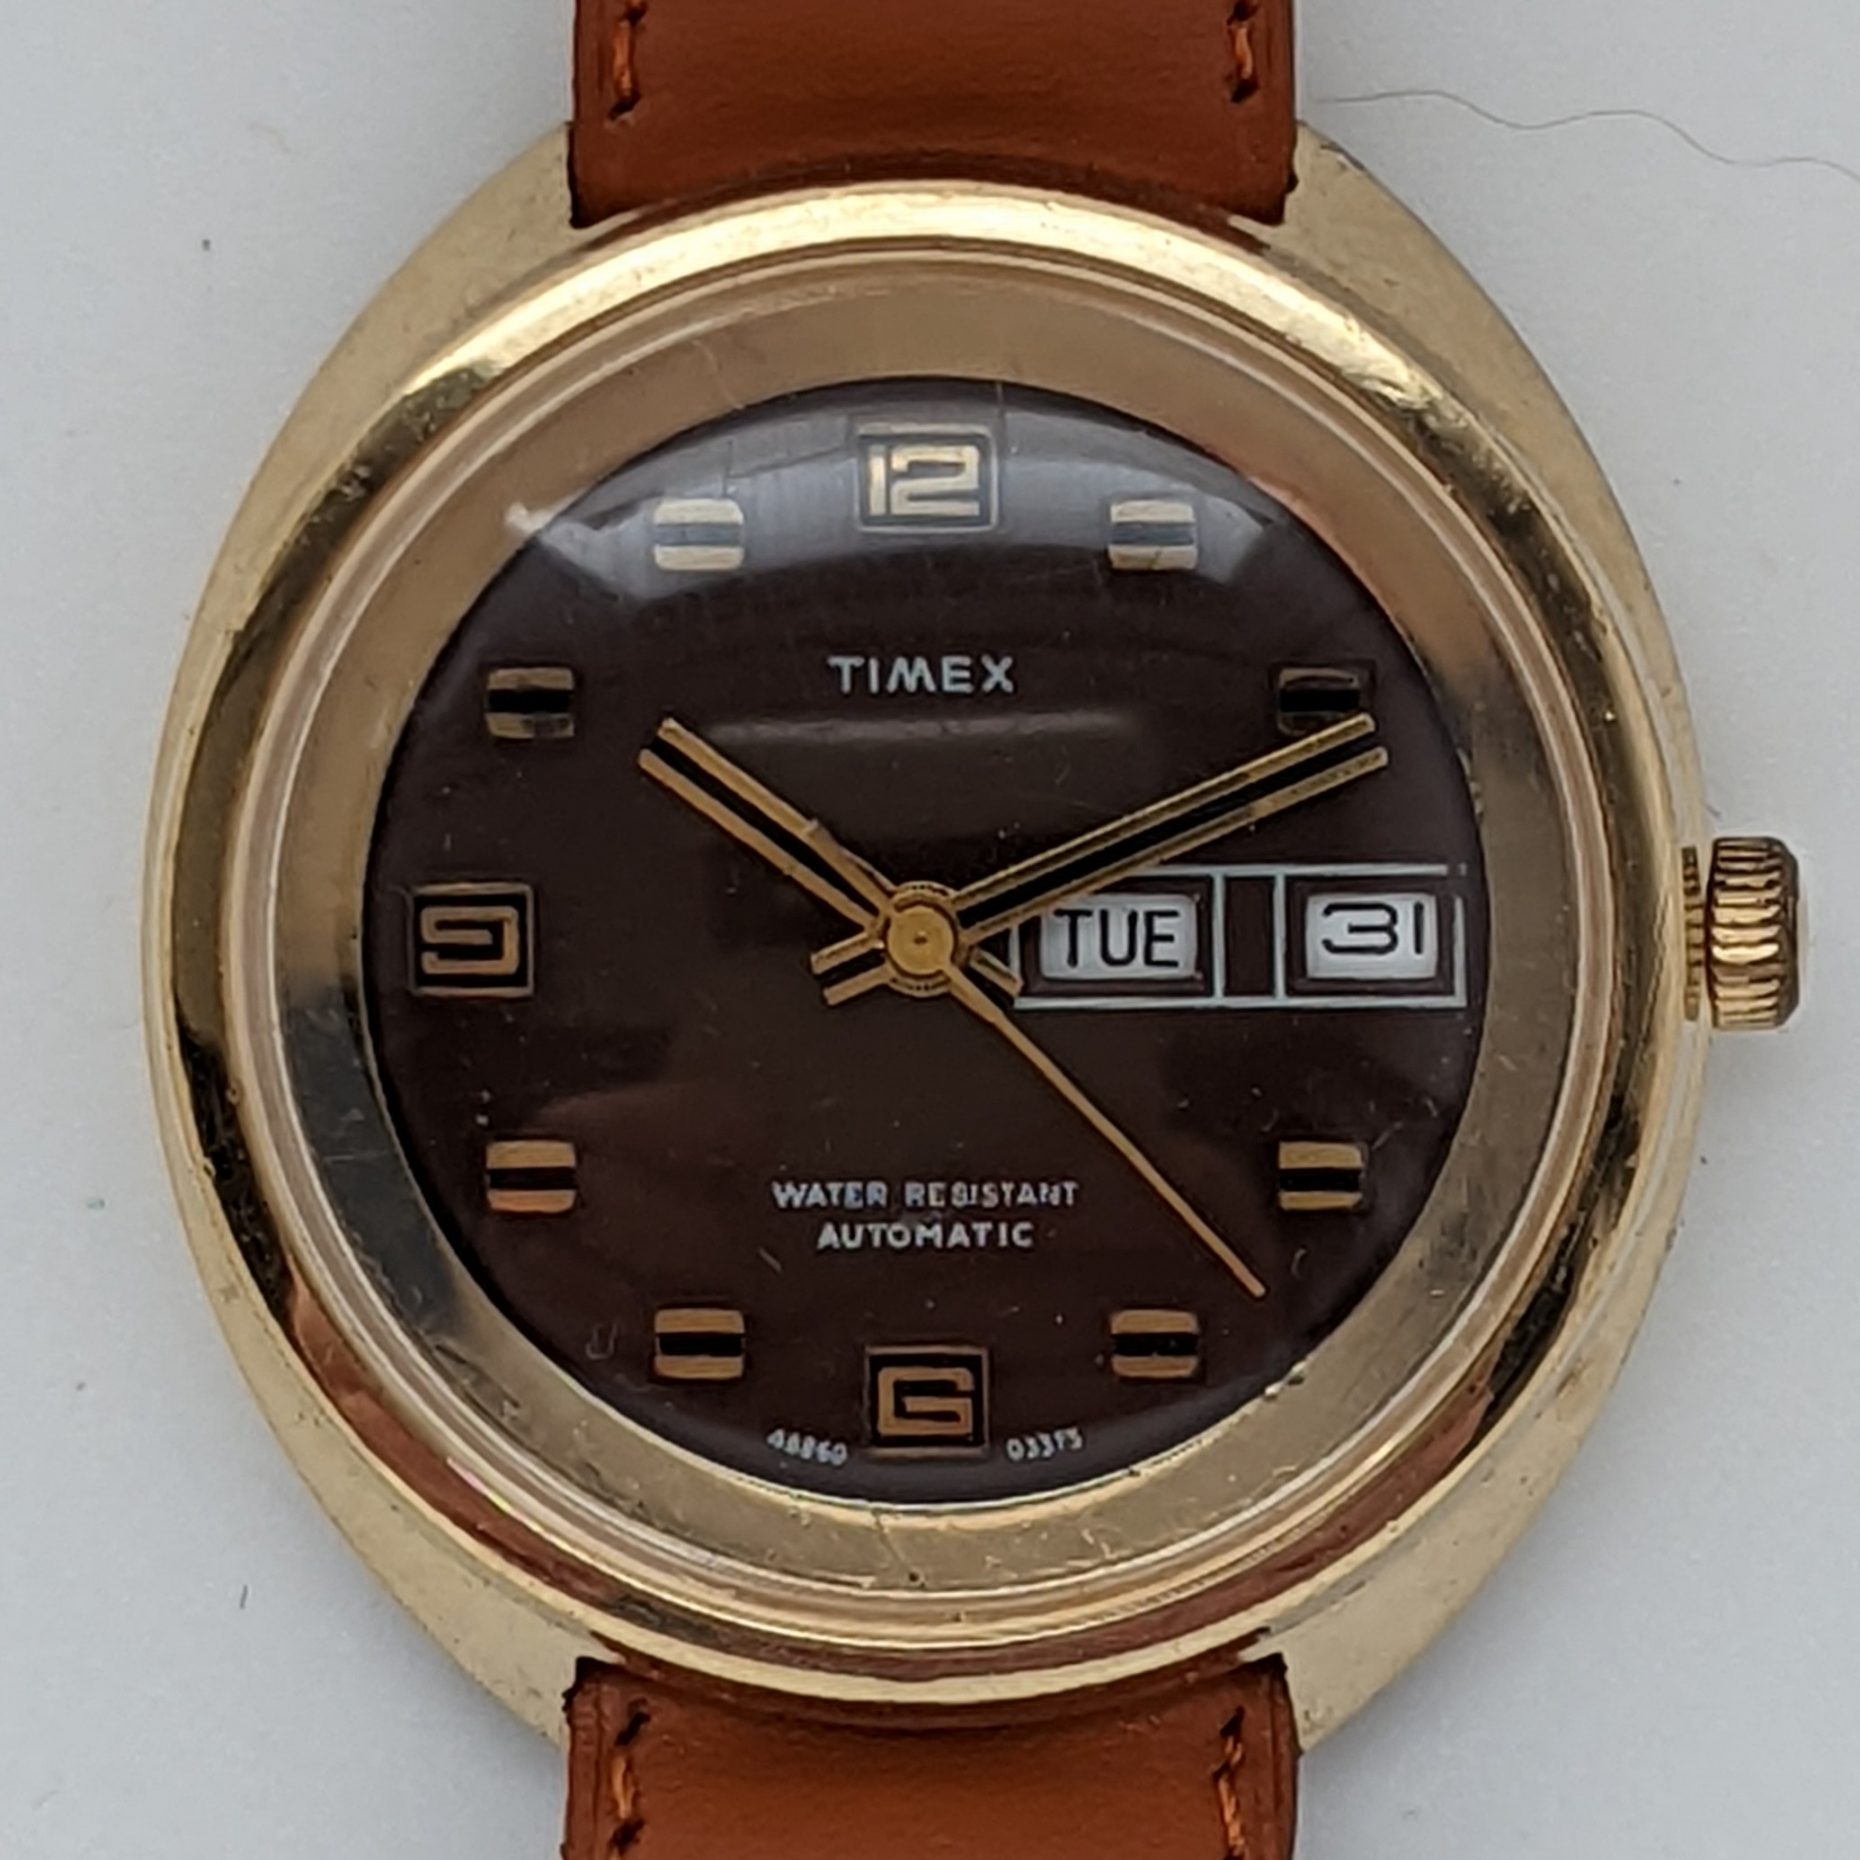 Timex Viscount 48860 03375 [1975]